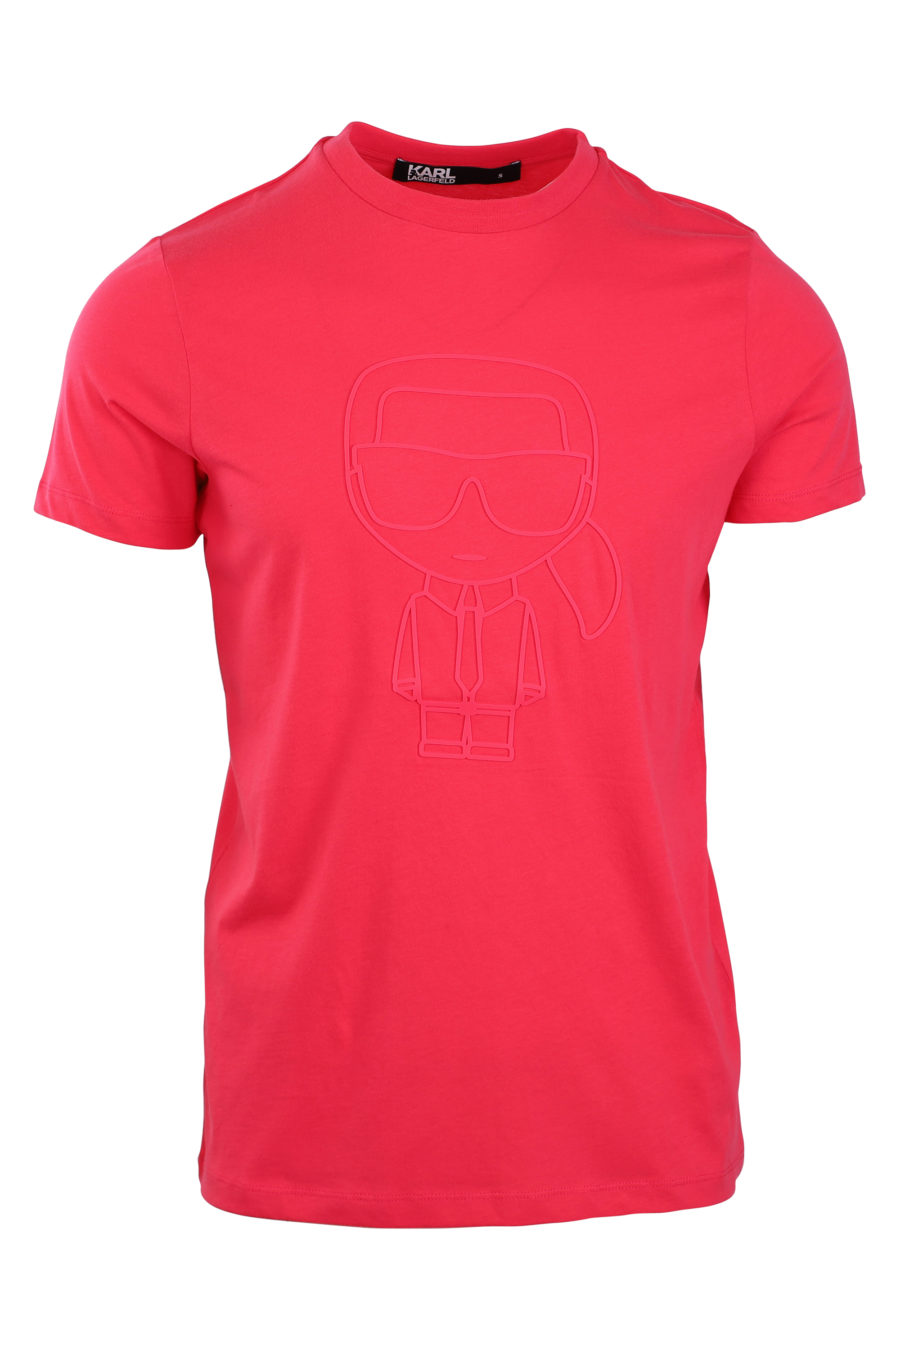 Fuchsia T-shirt with logo in monochrome silhouette - IMG 0844